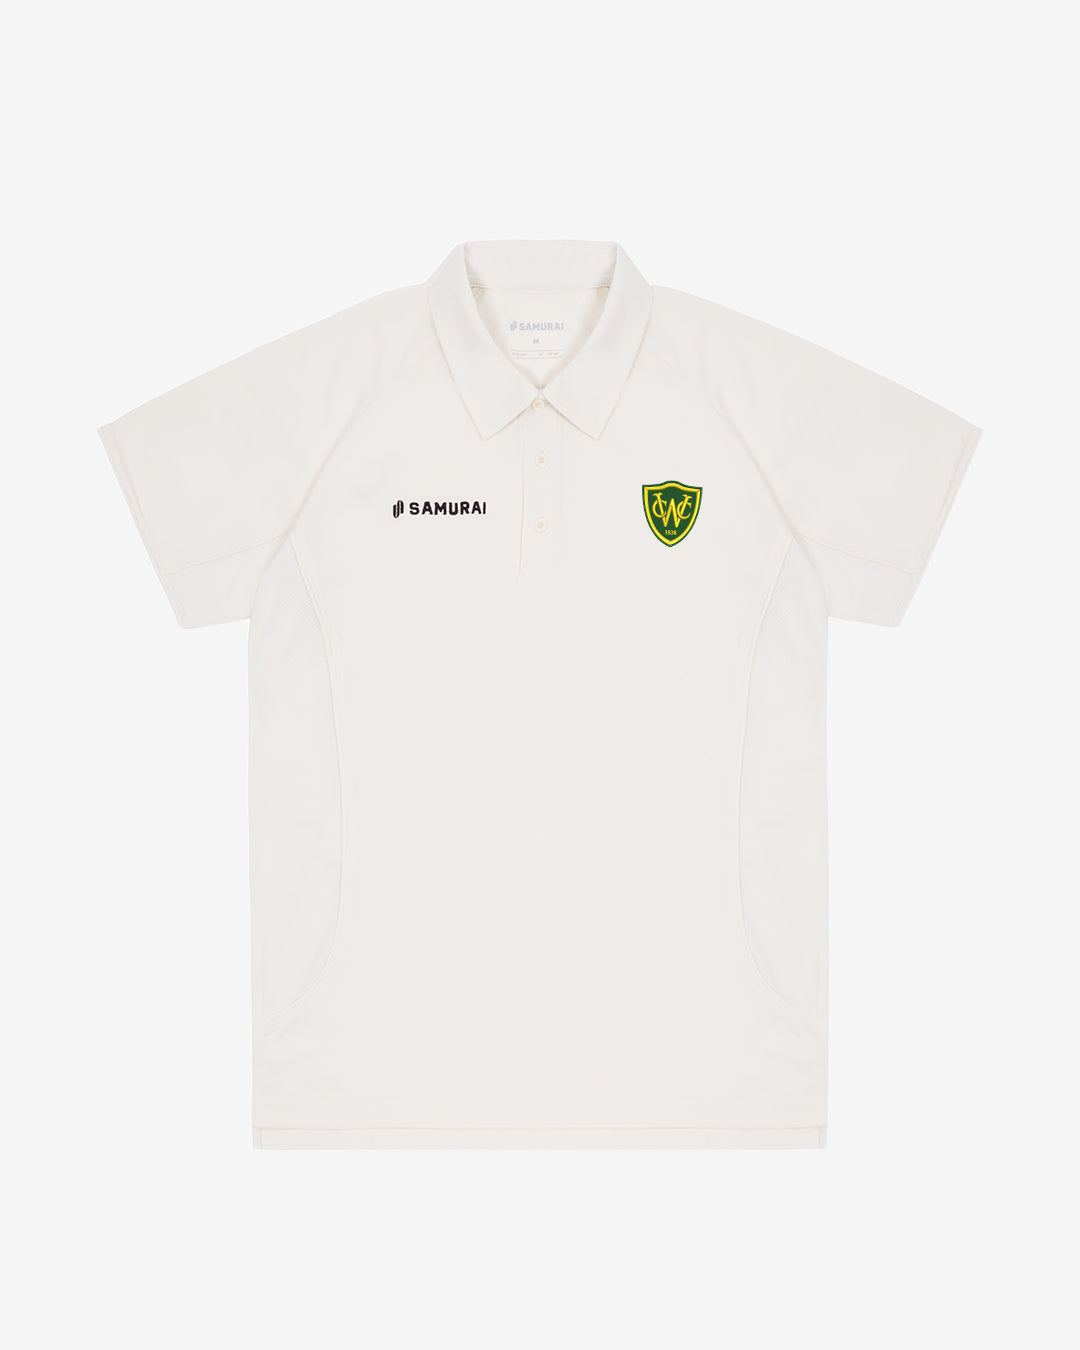 Warminster CC - EP:0130 - Cricket Short Sleeve Shirt